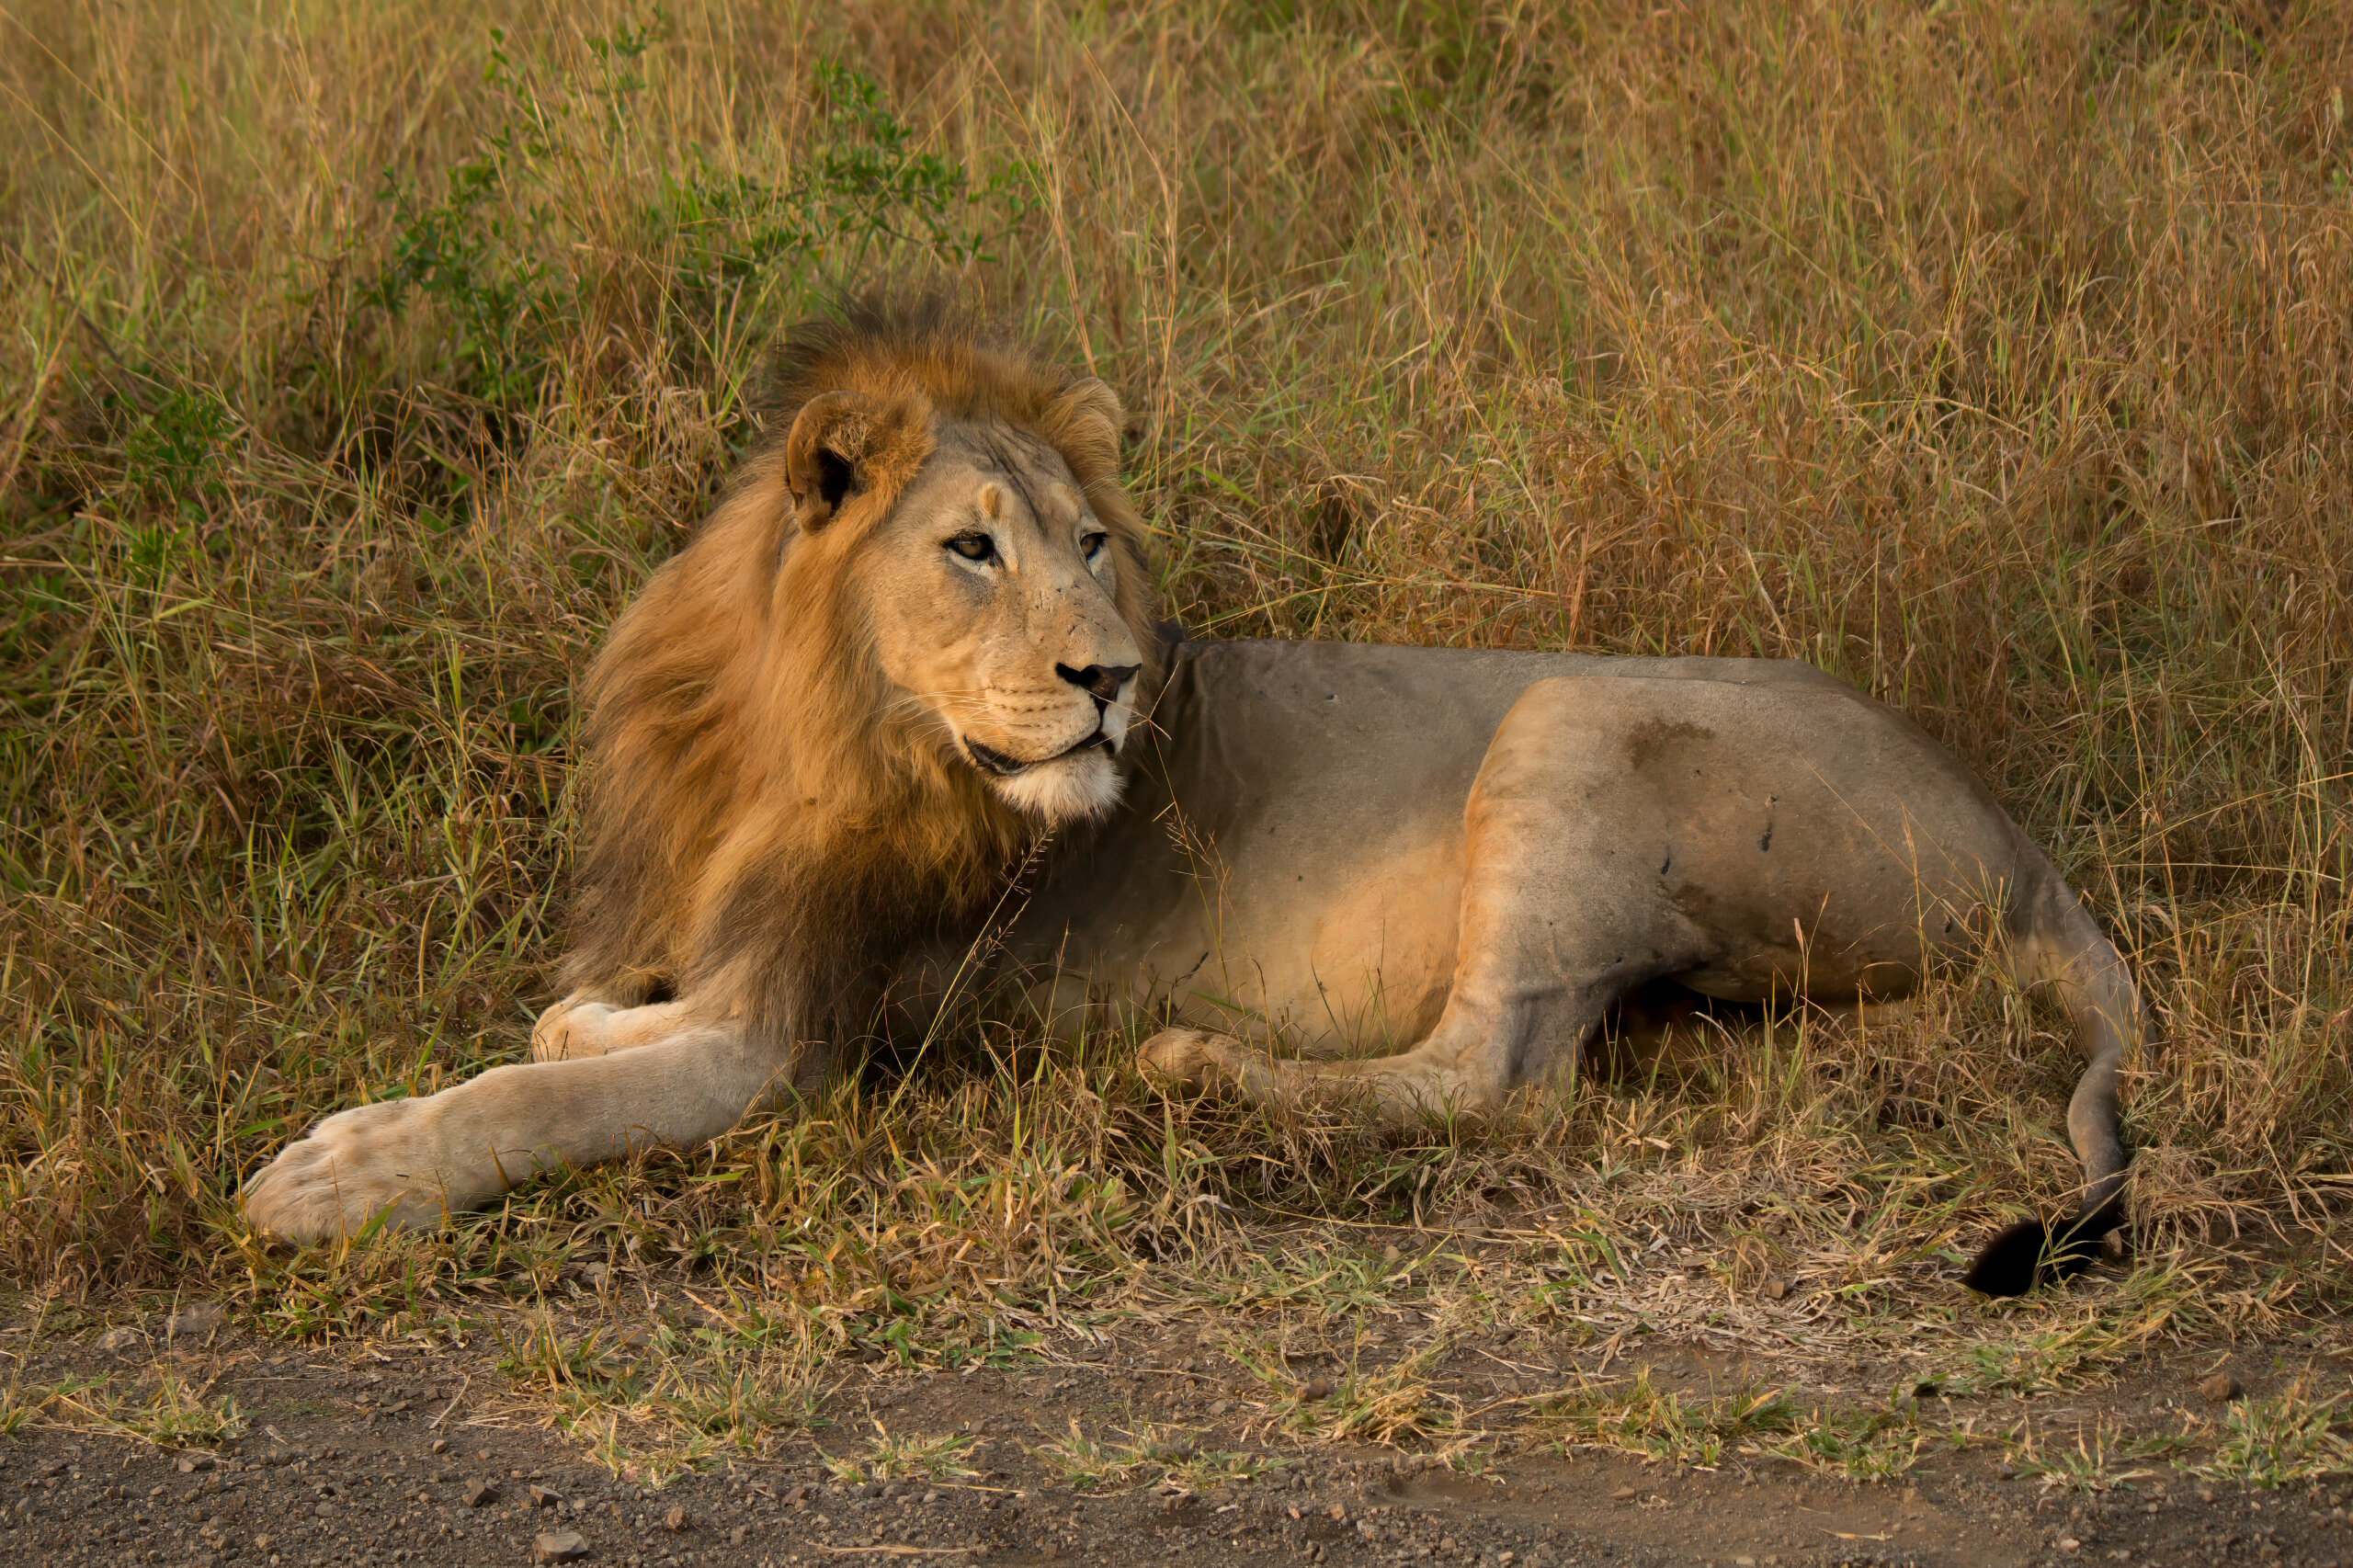 Lion (Panthera leo) @ Thanda Game Reserve, South Africa. Photo: Håvard Rosenlund